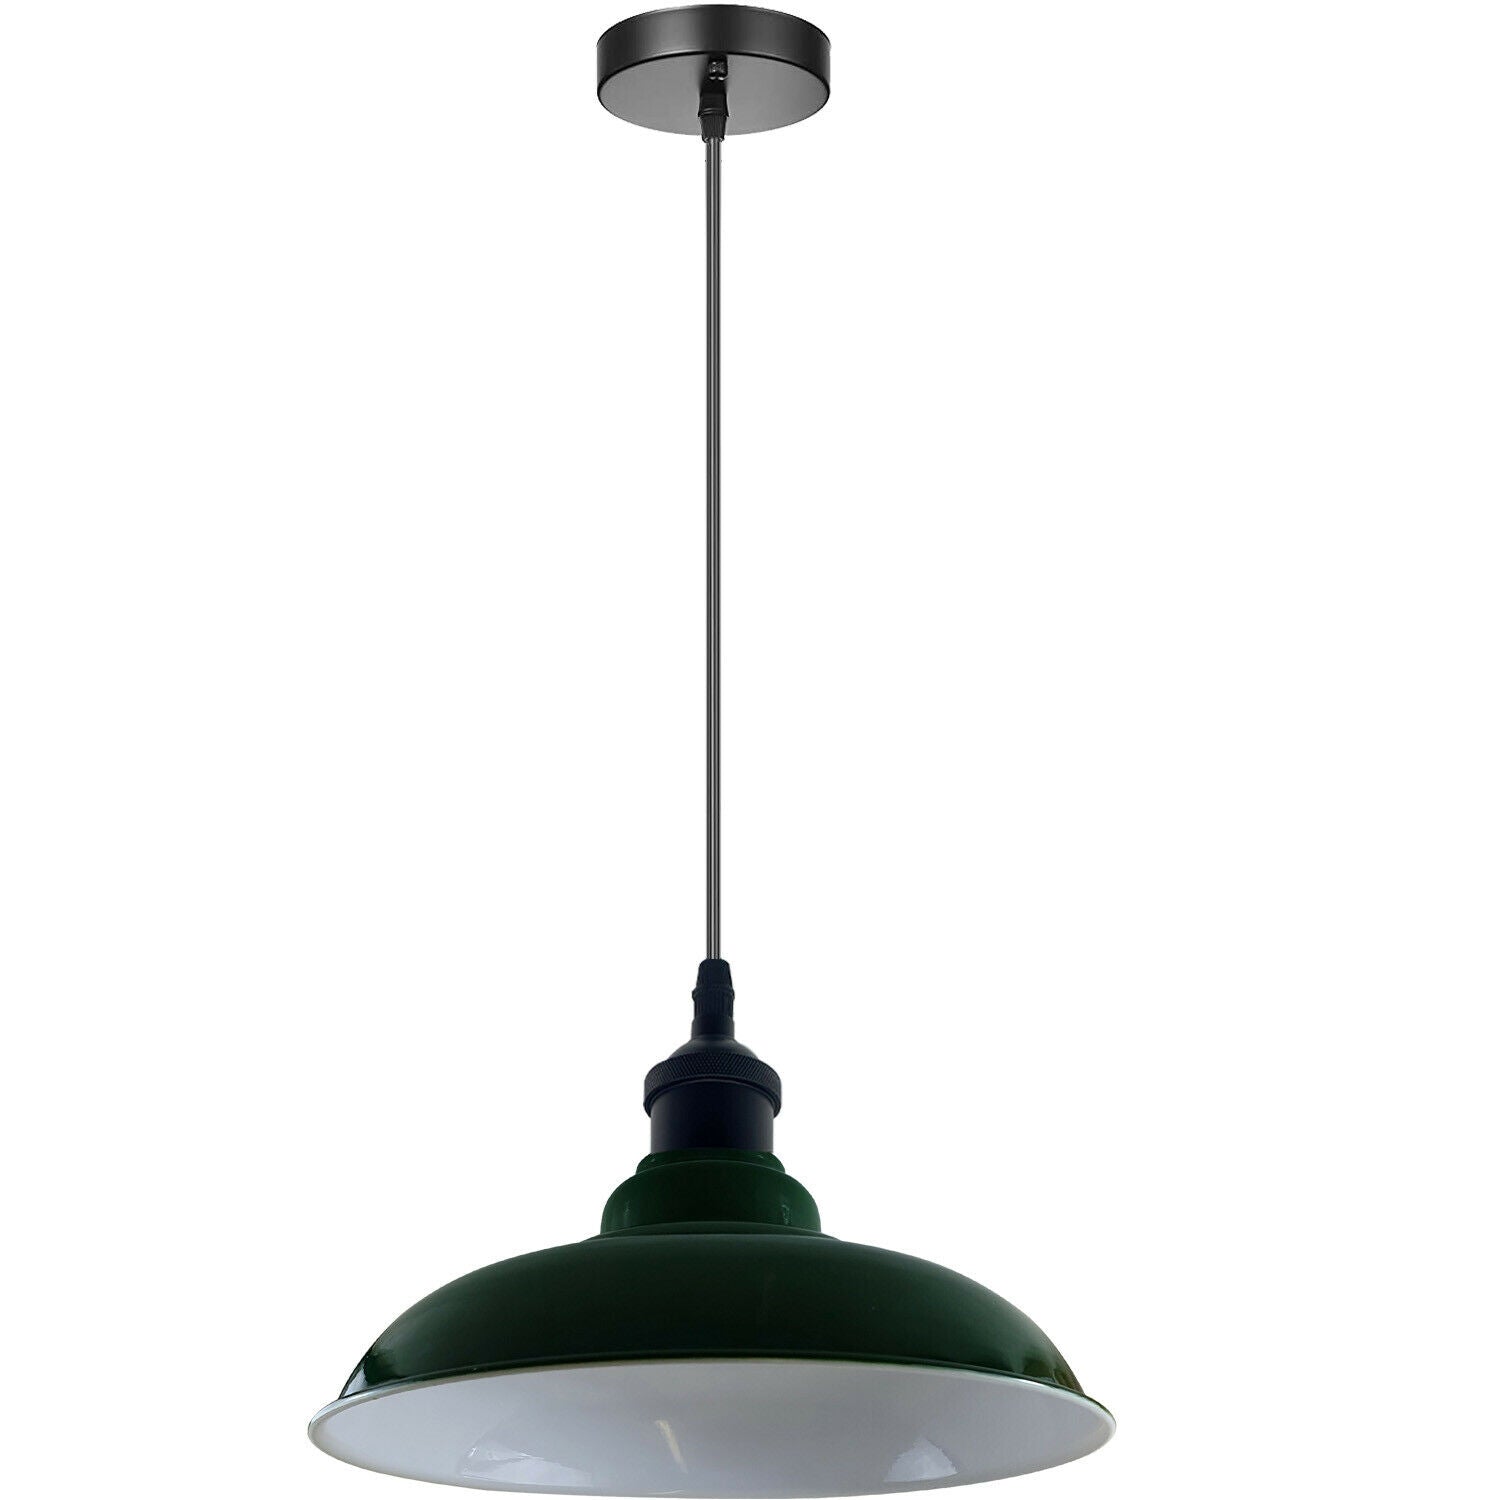 LEDSone industrial Vintage  32cm  Green Pendant Retro Metal Lamp Shade E27 Uk Holder~3688 - LEDSone UK Ltd